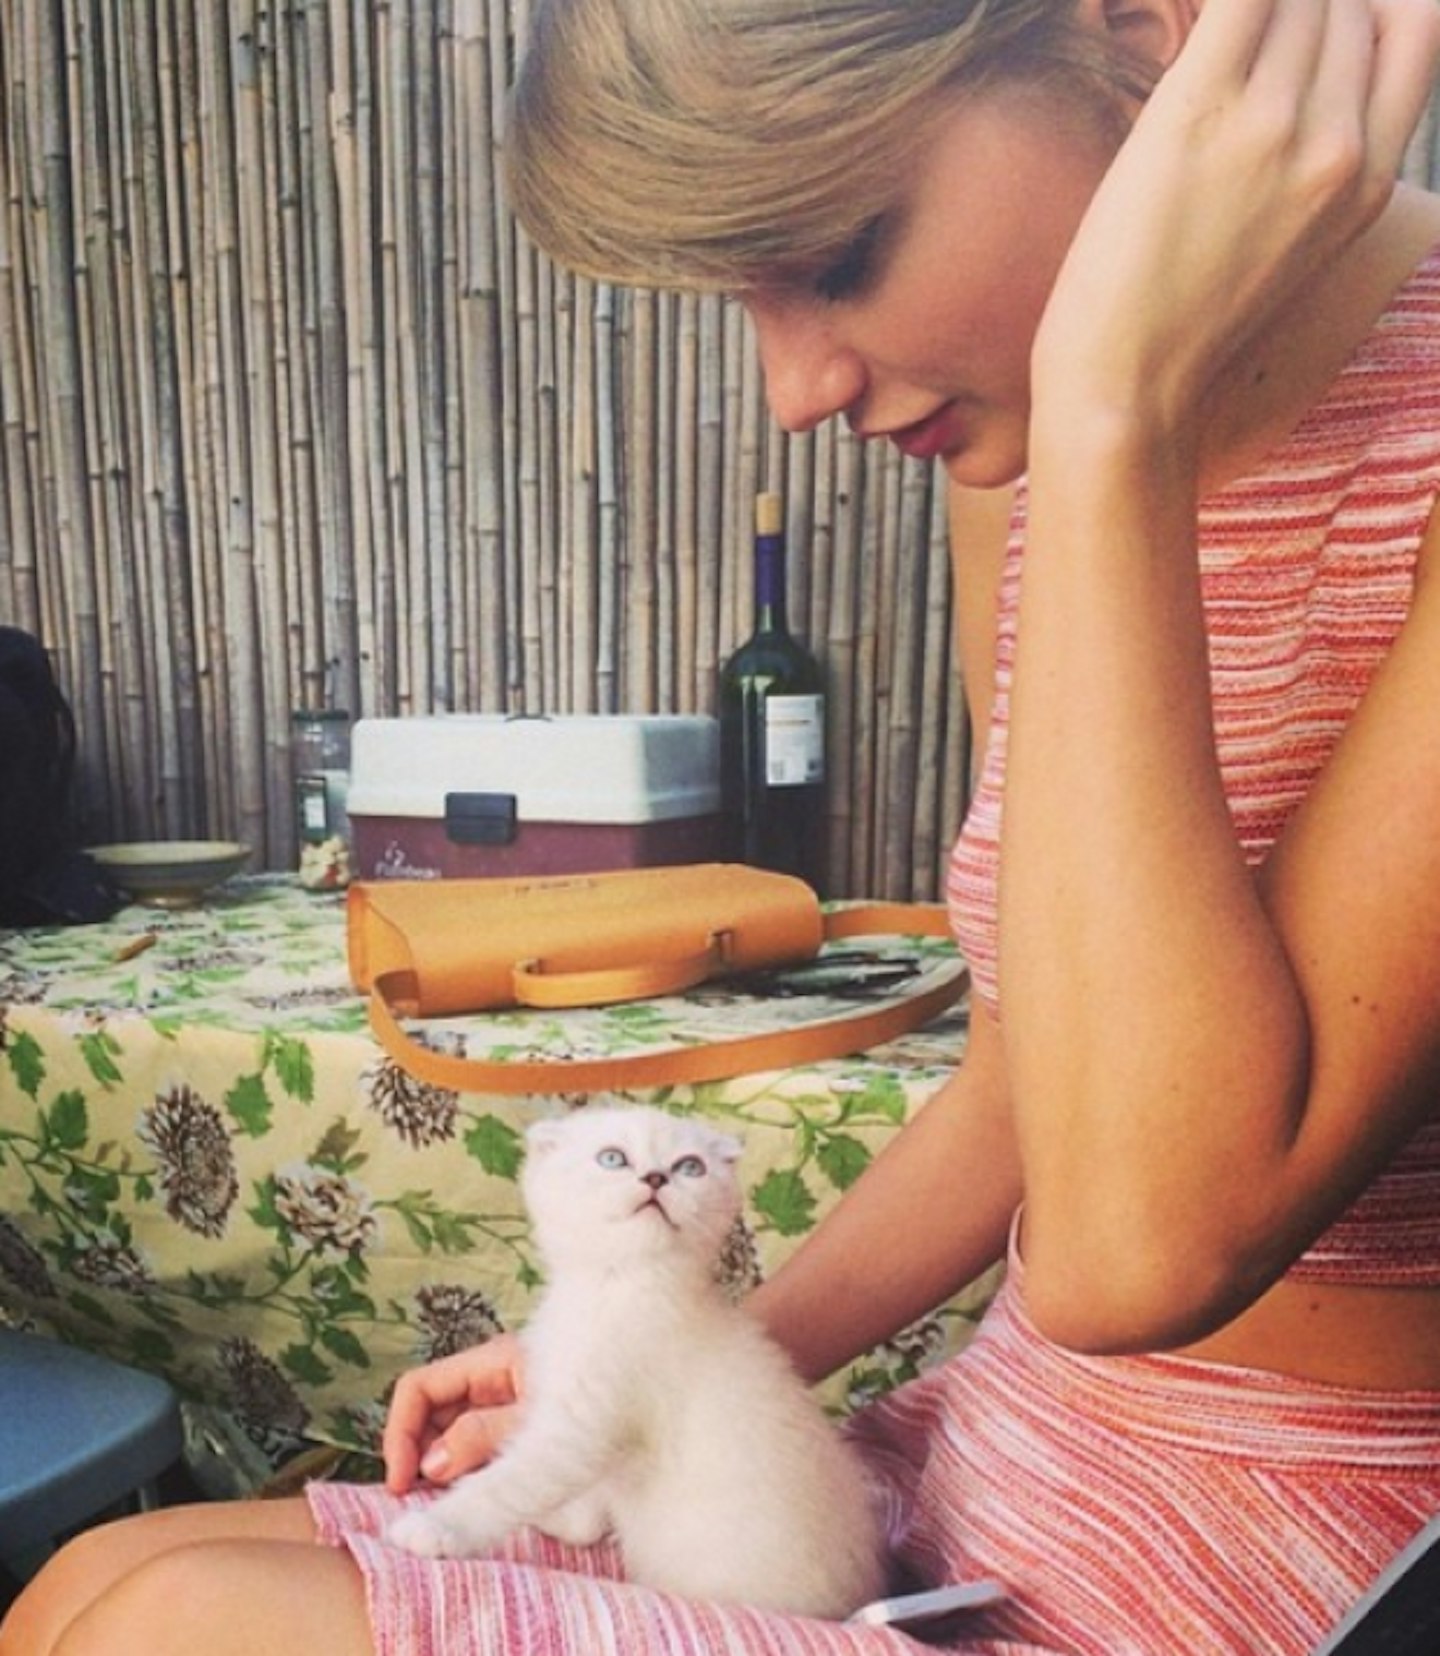 She has a cute kitten called Olivia Benson